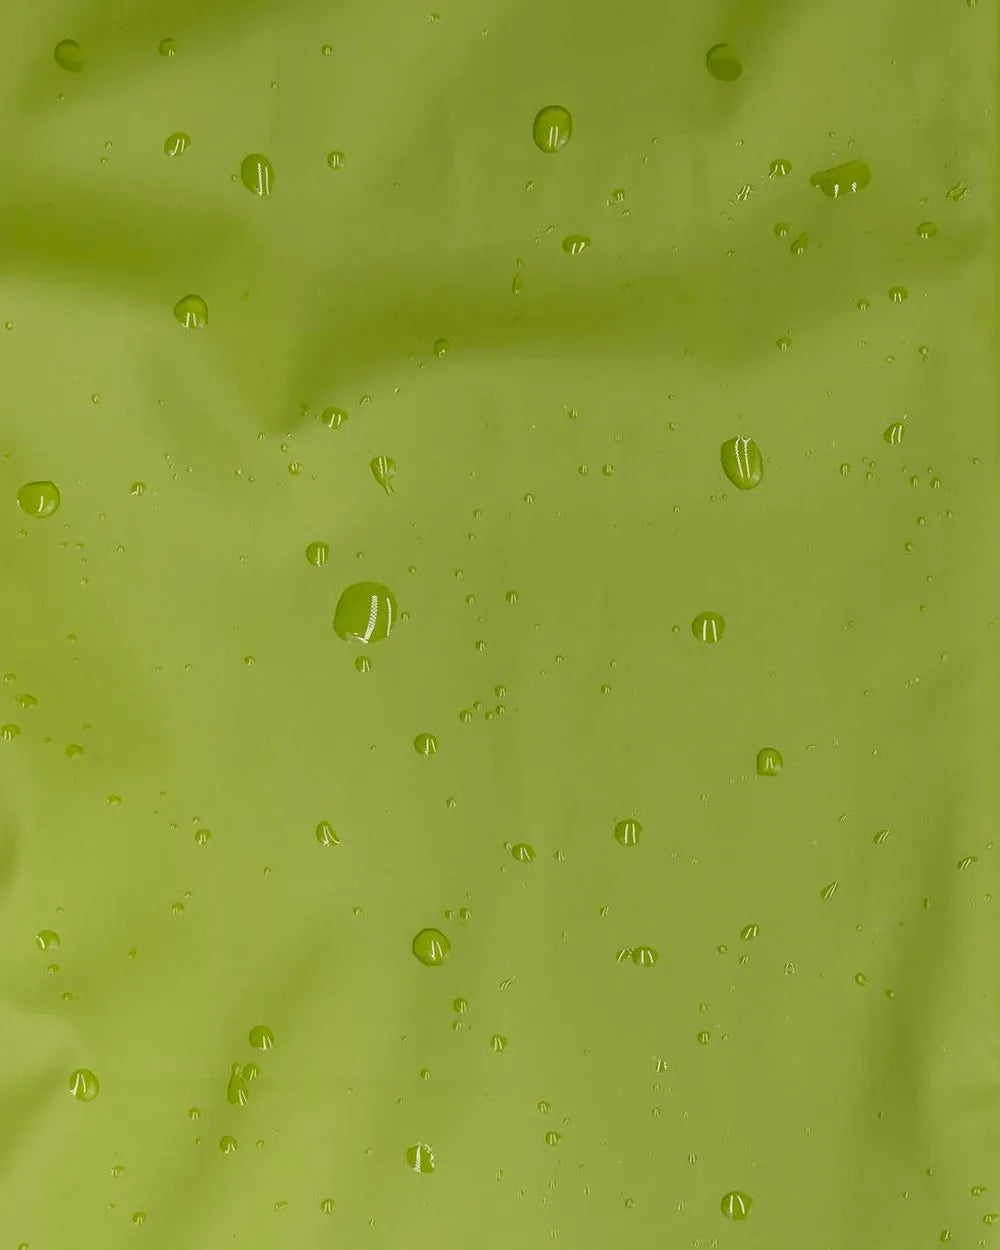 Original Raincoat  - Cedar Green